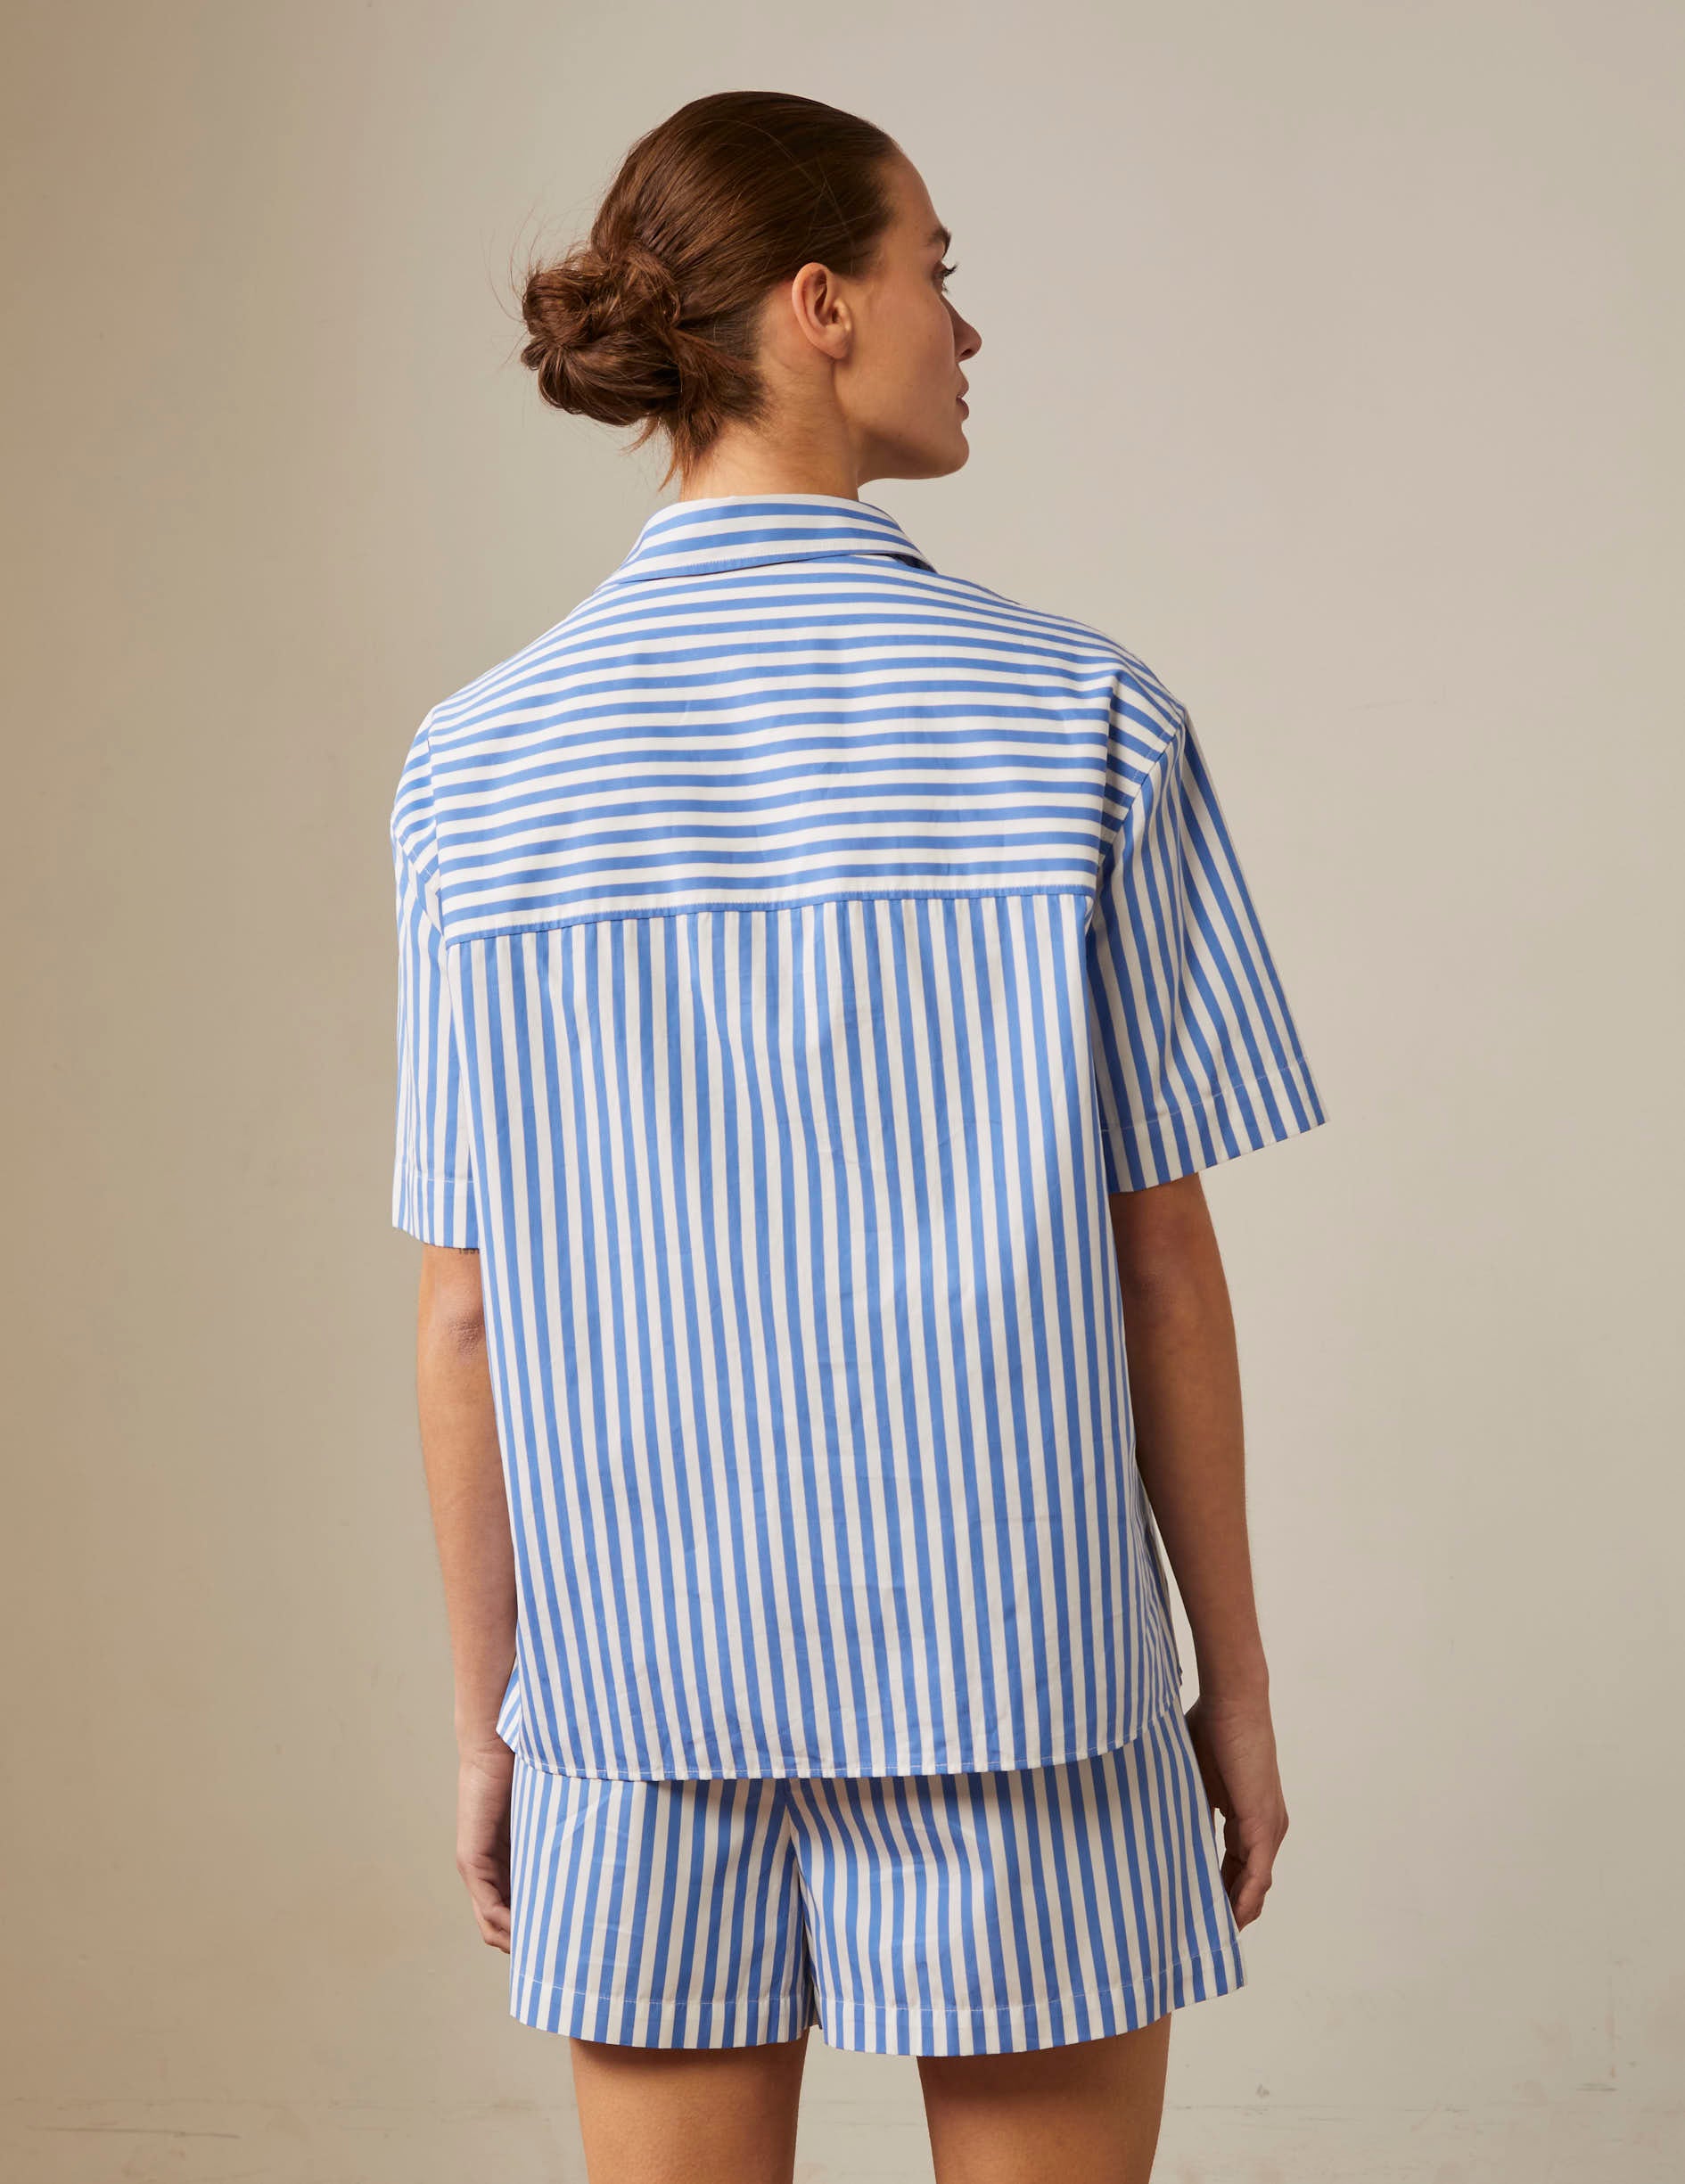 Short sleeve striped blue Hillary shirt - Poplin - Shirt Collar